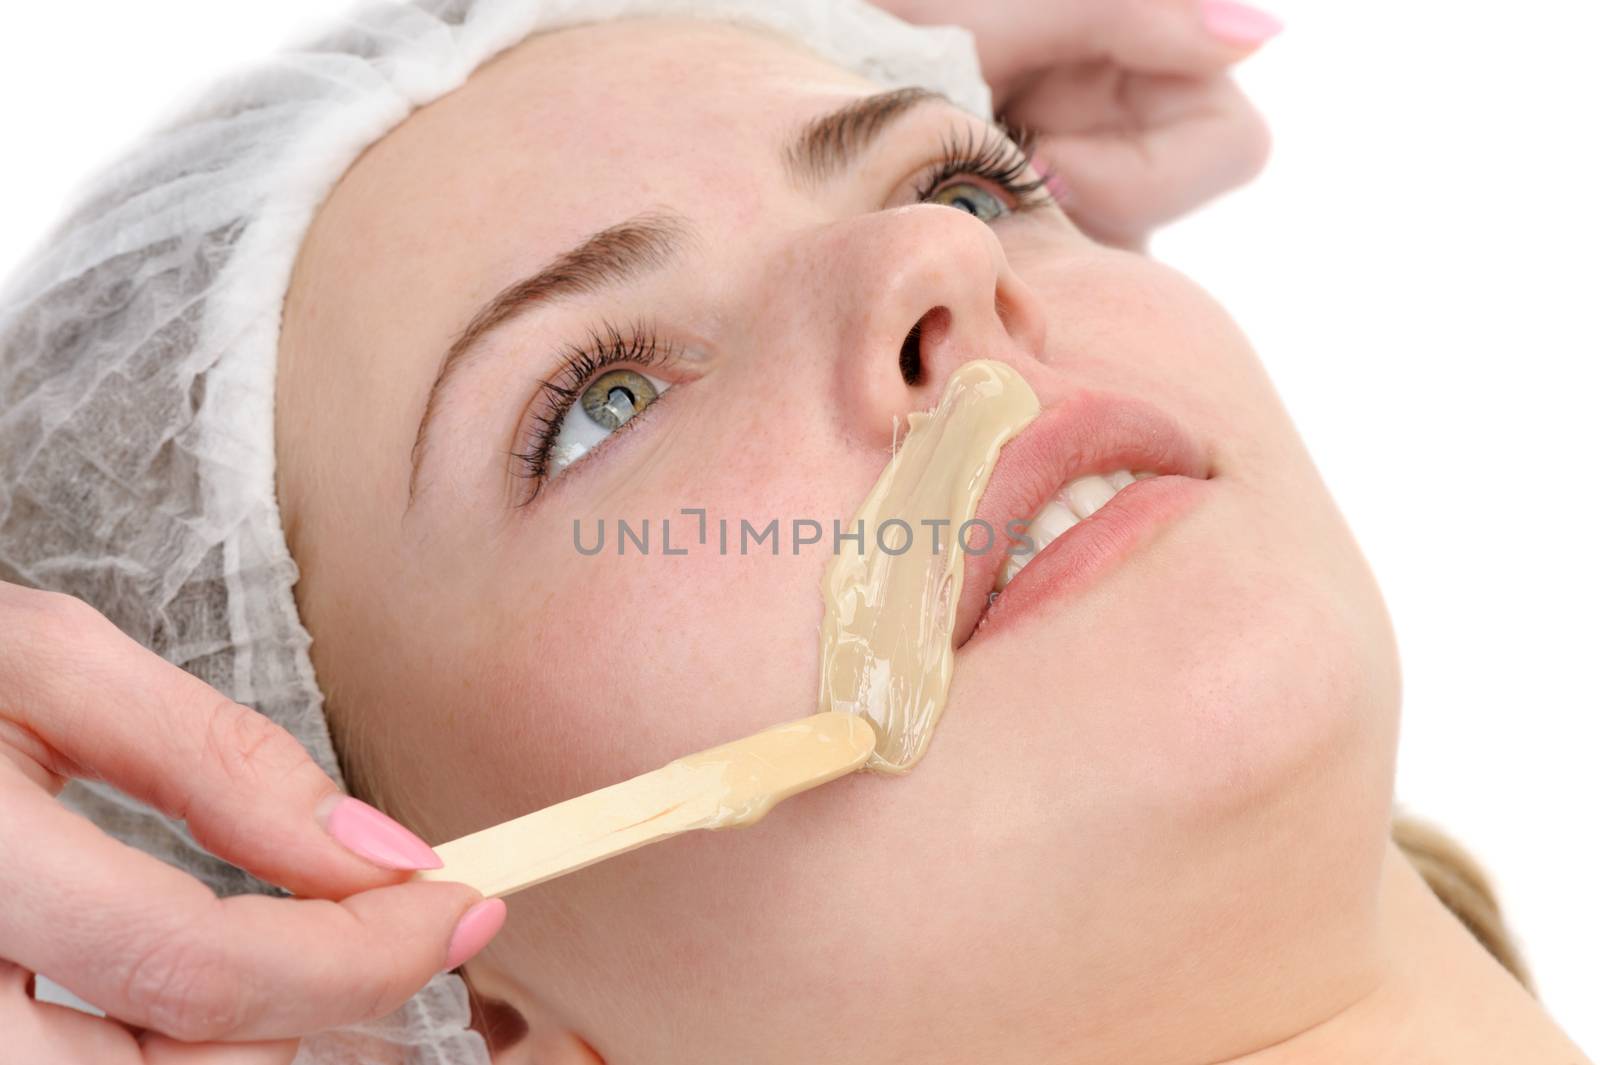 beauty salon, mustache depilation, facial skin treatment and care; focus on upper lip